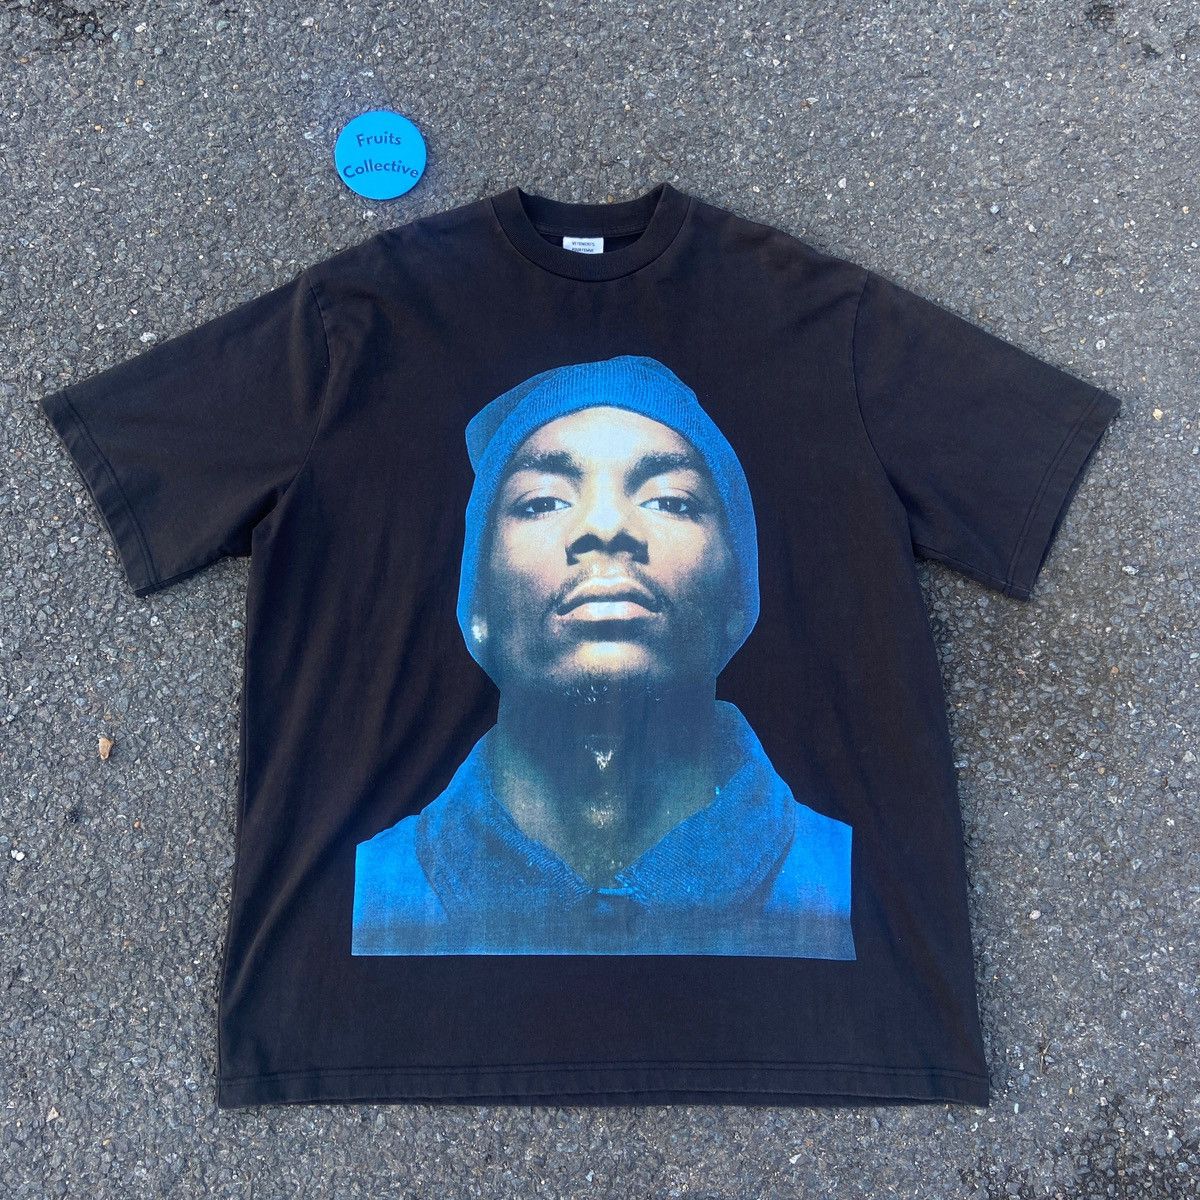 Vetements Vetements Snoop Dogg t-shirt | Grailed